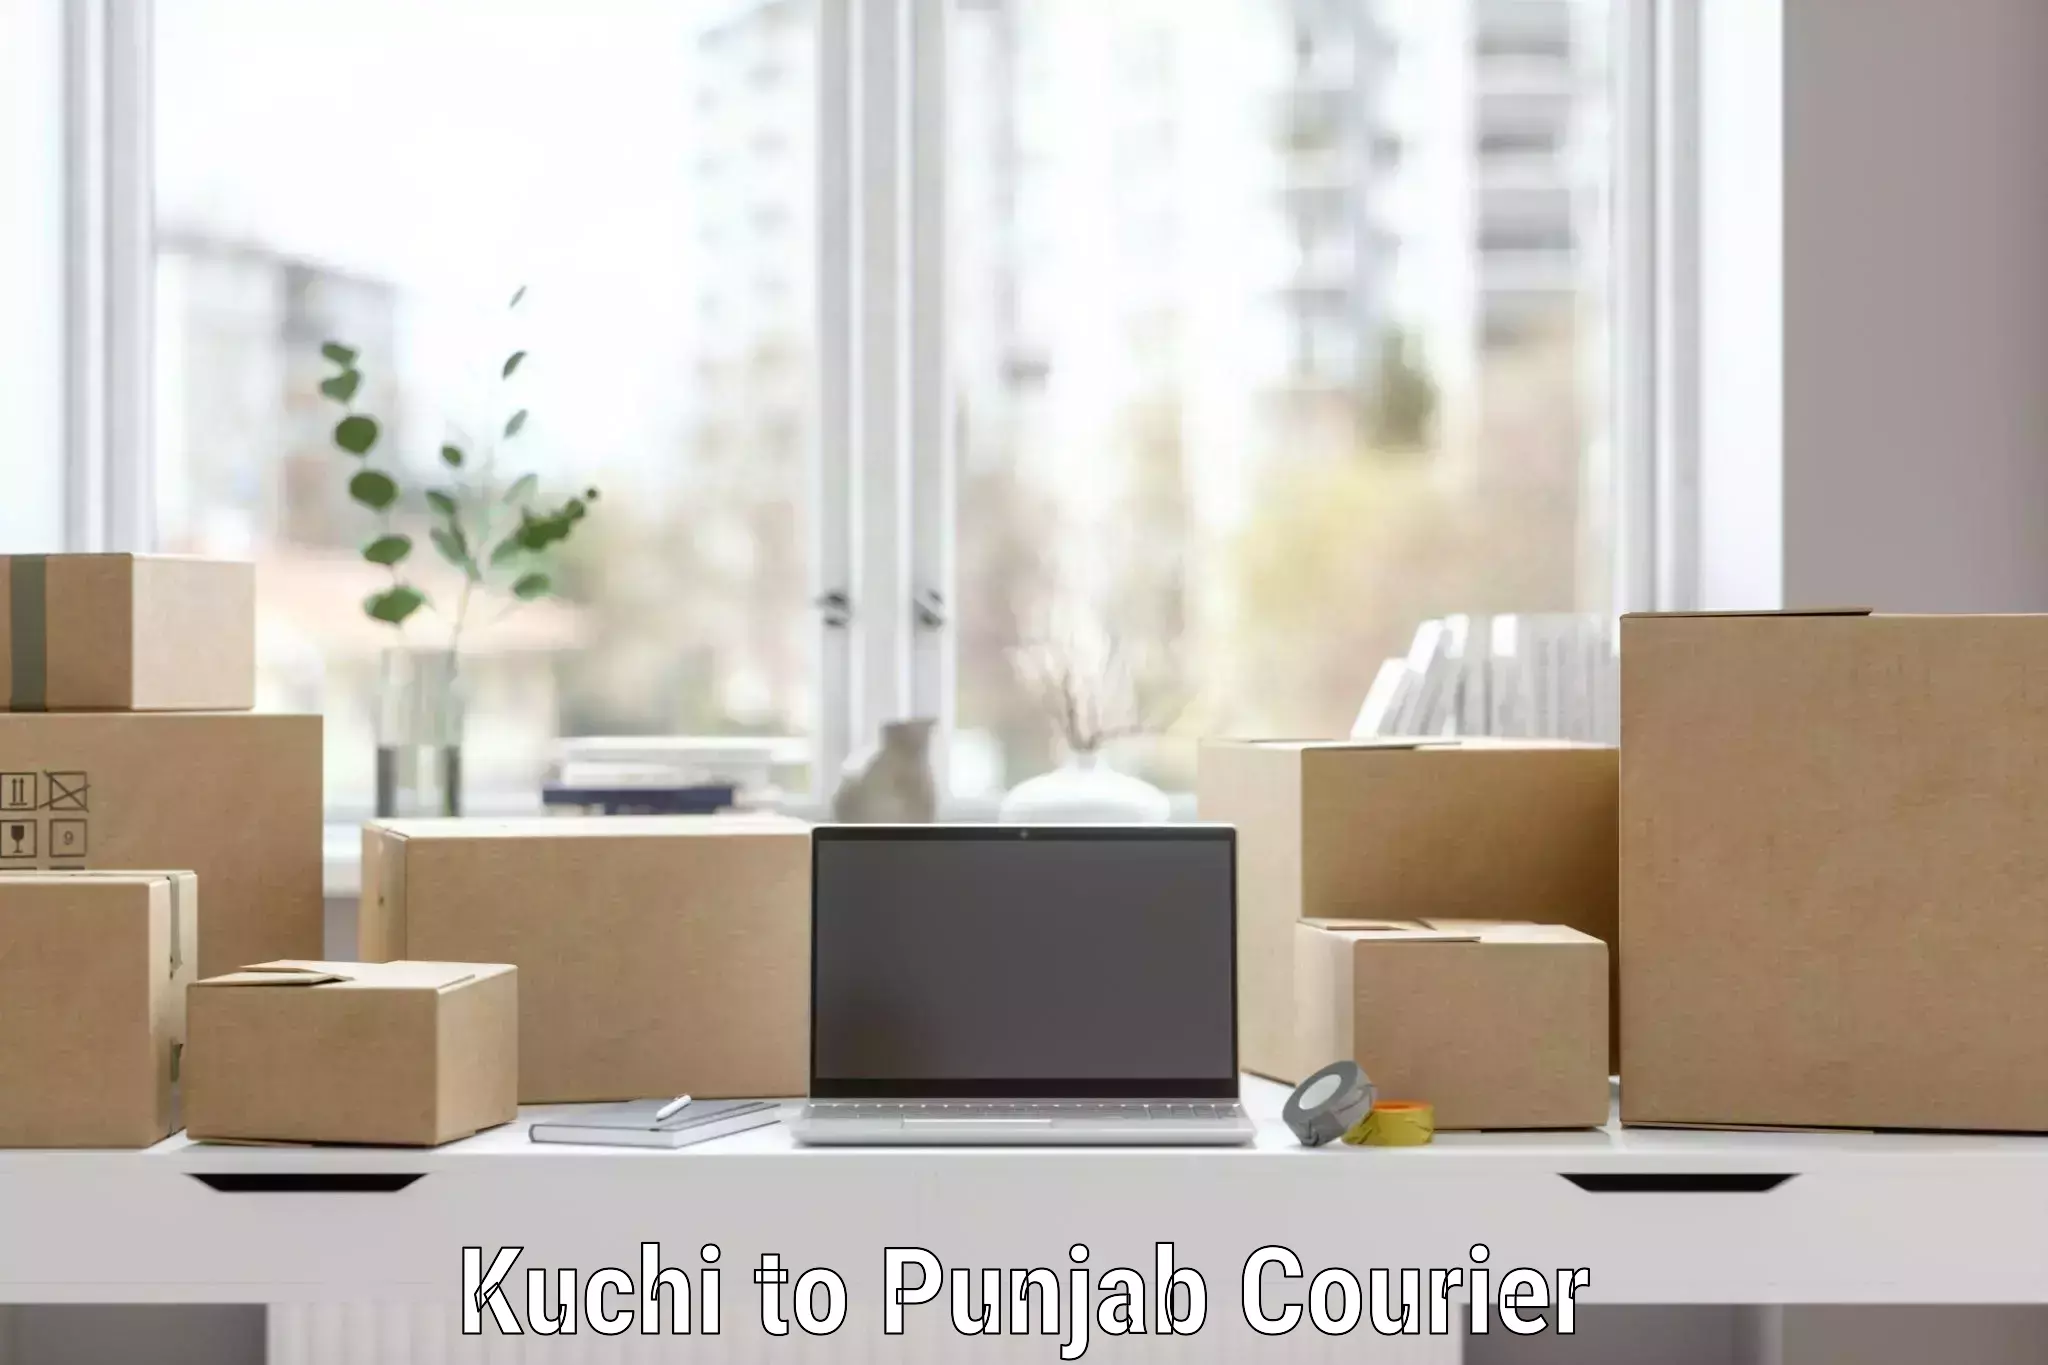 Quality relocation services Kuchi to Punjab